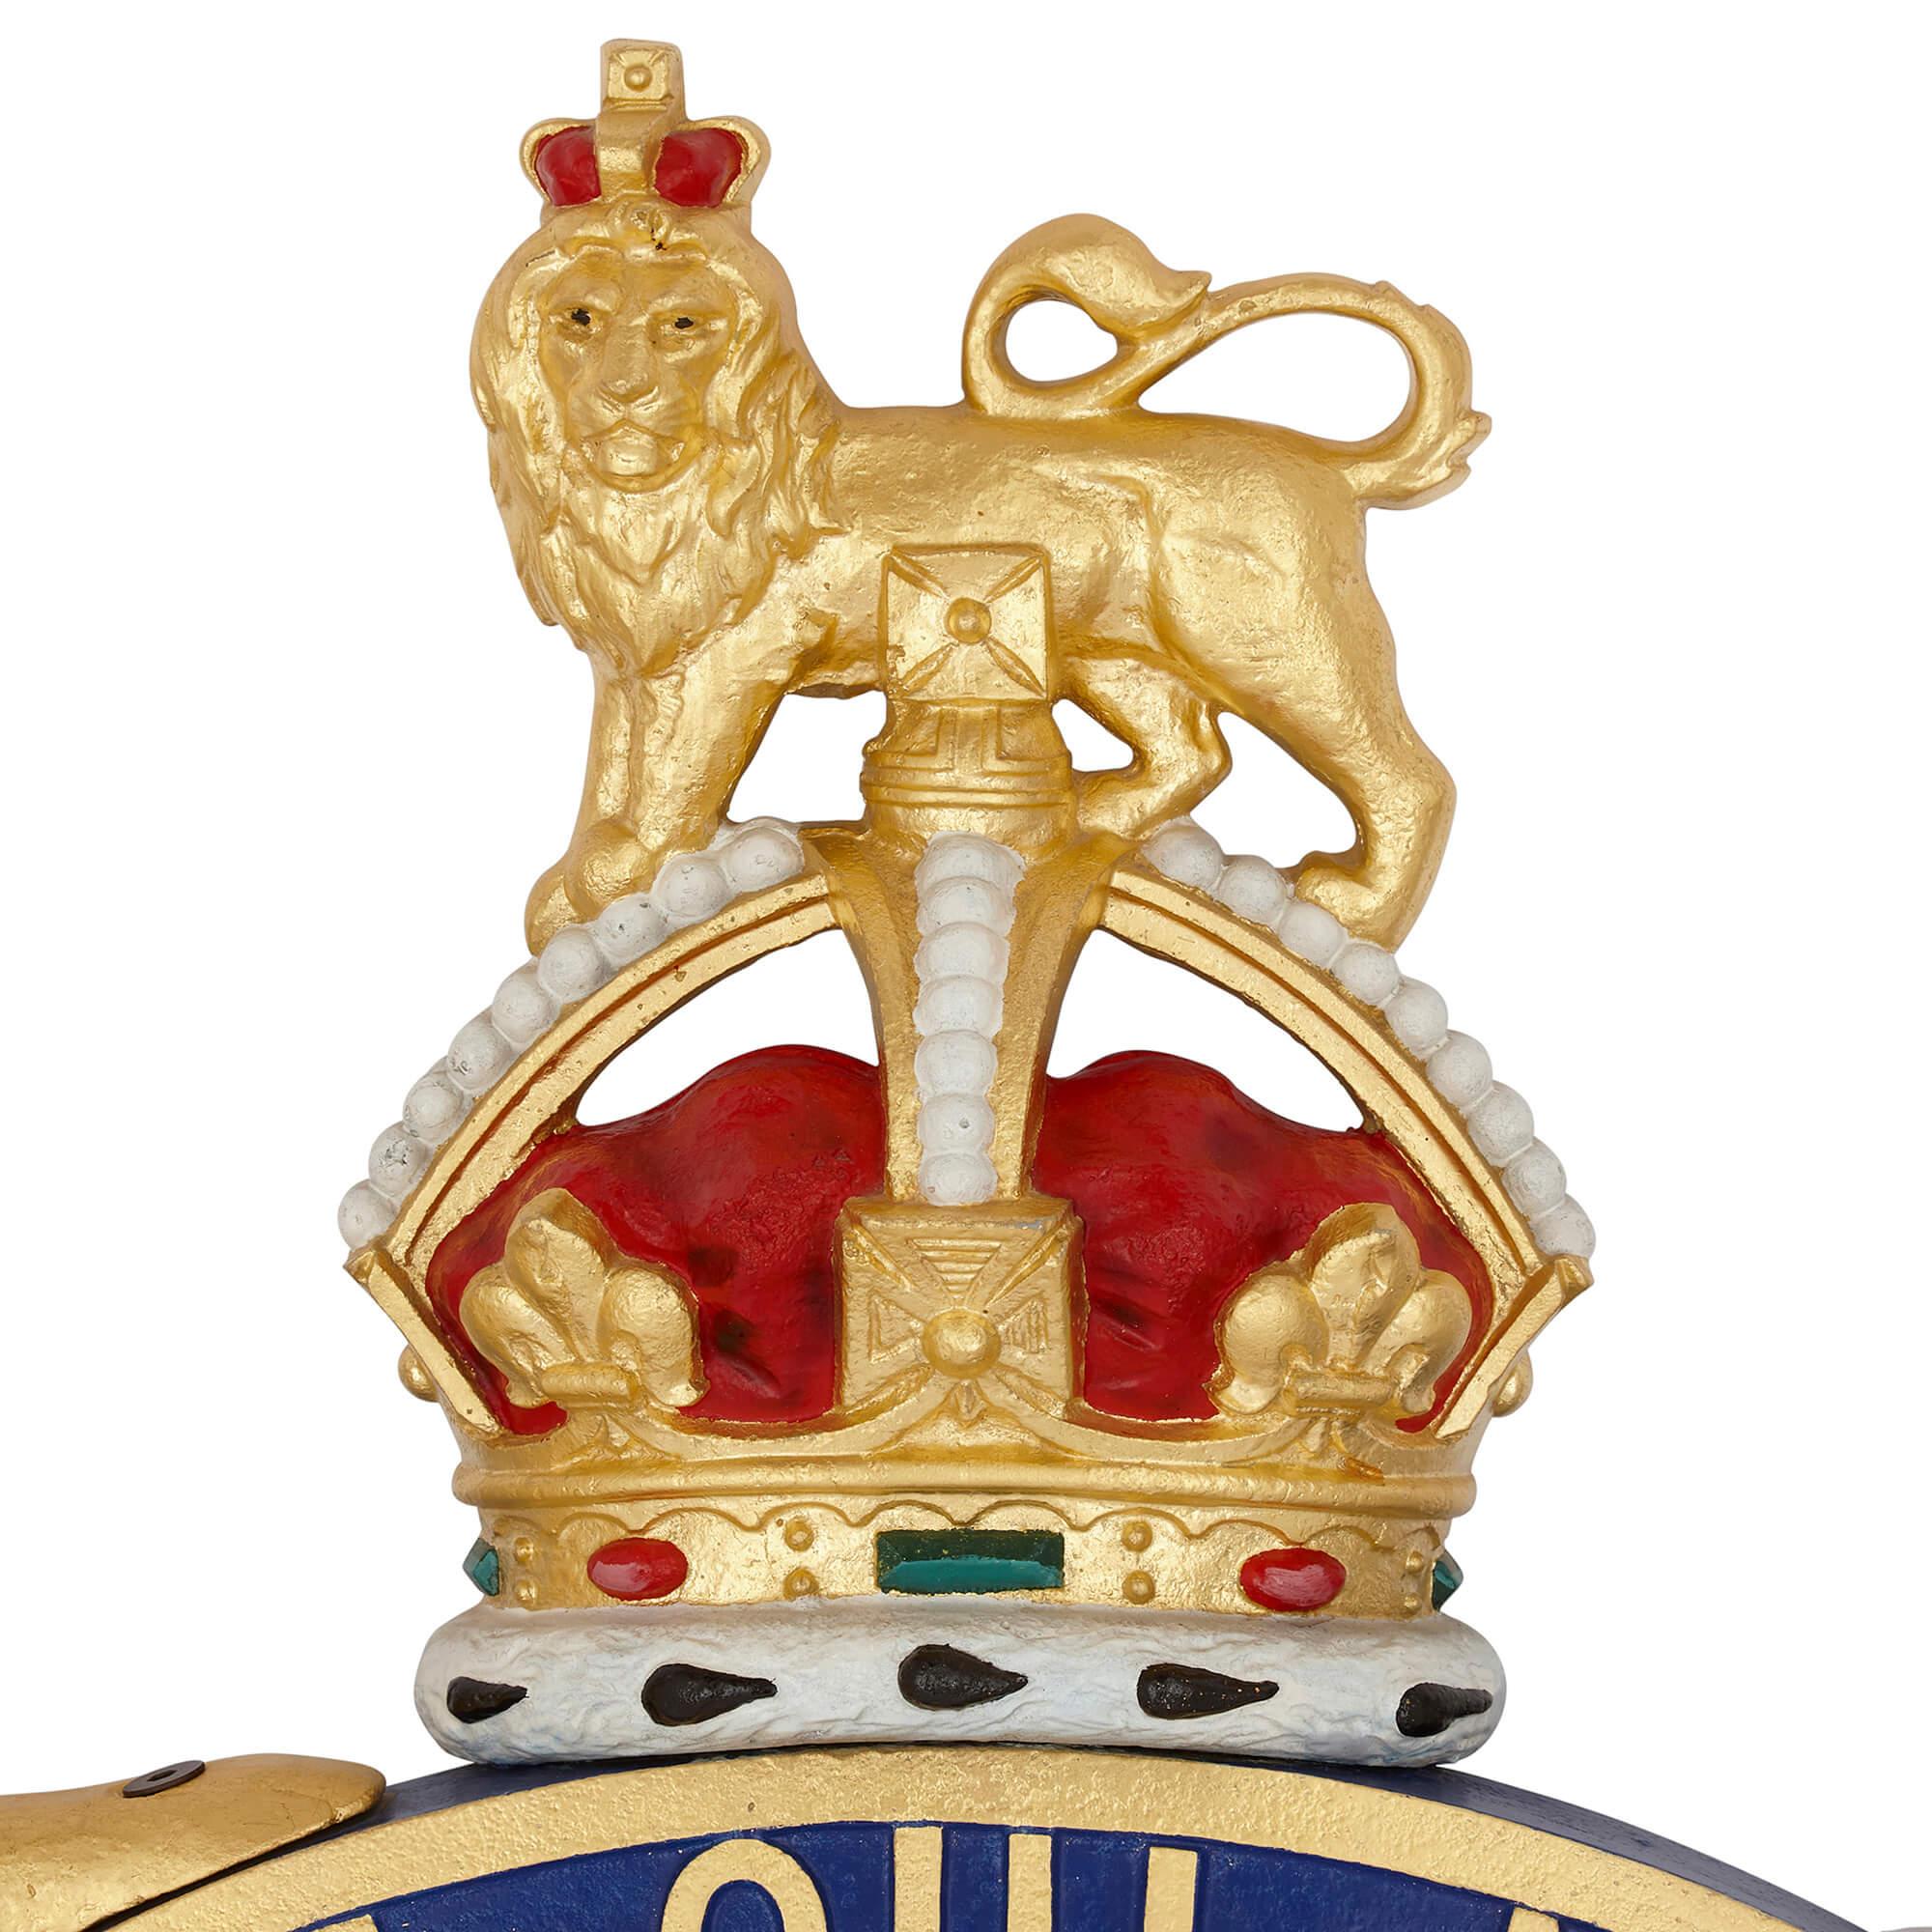 united kingdom emblem